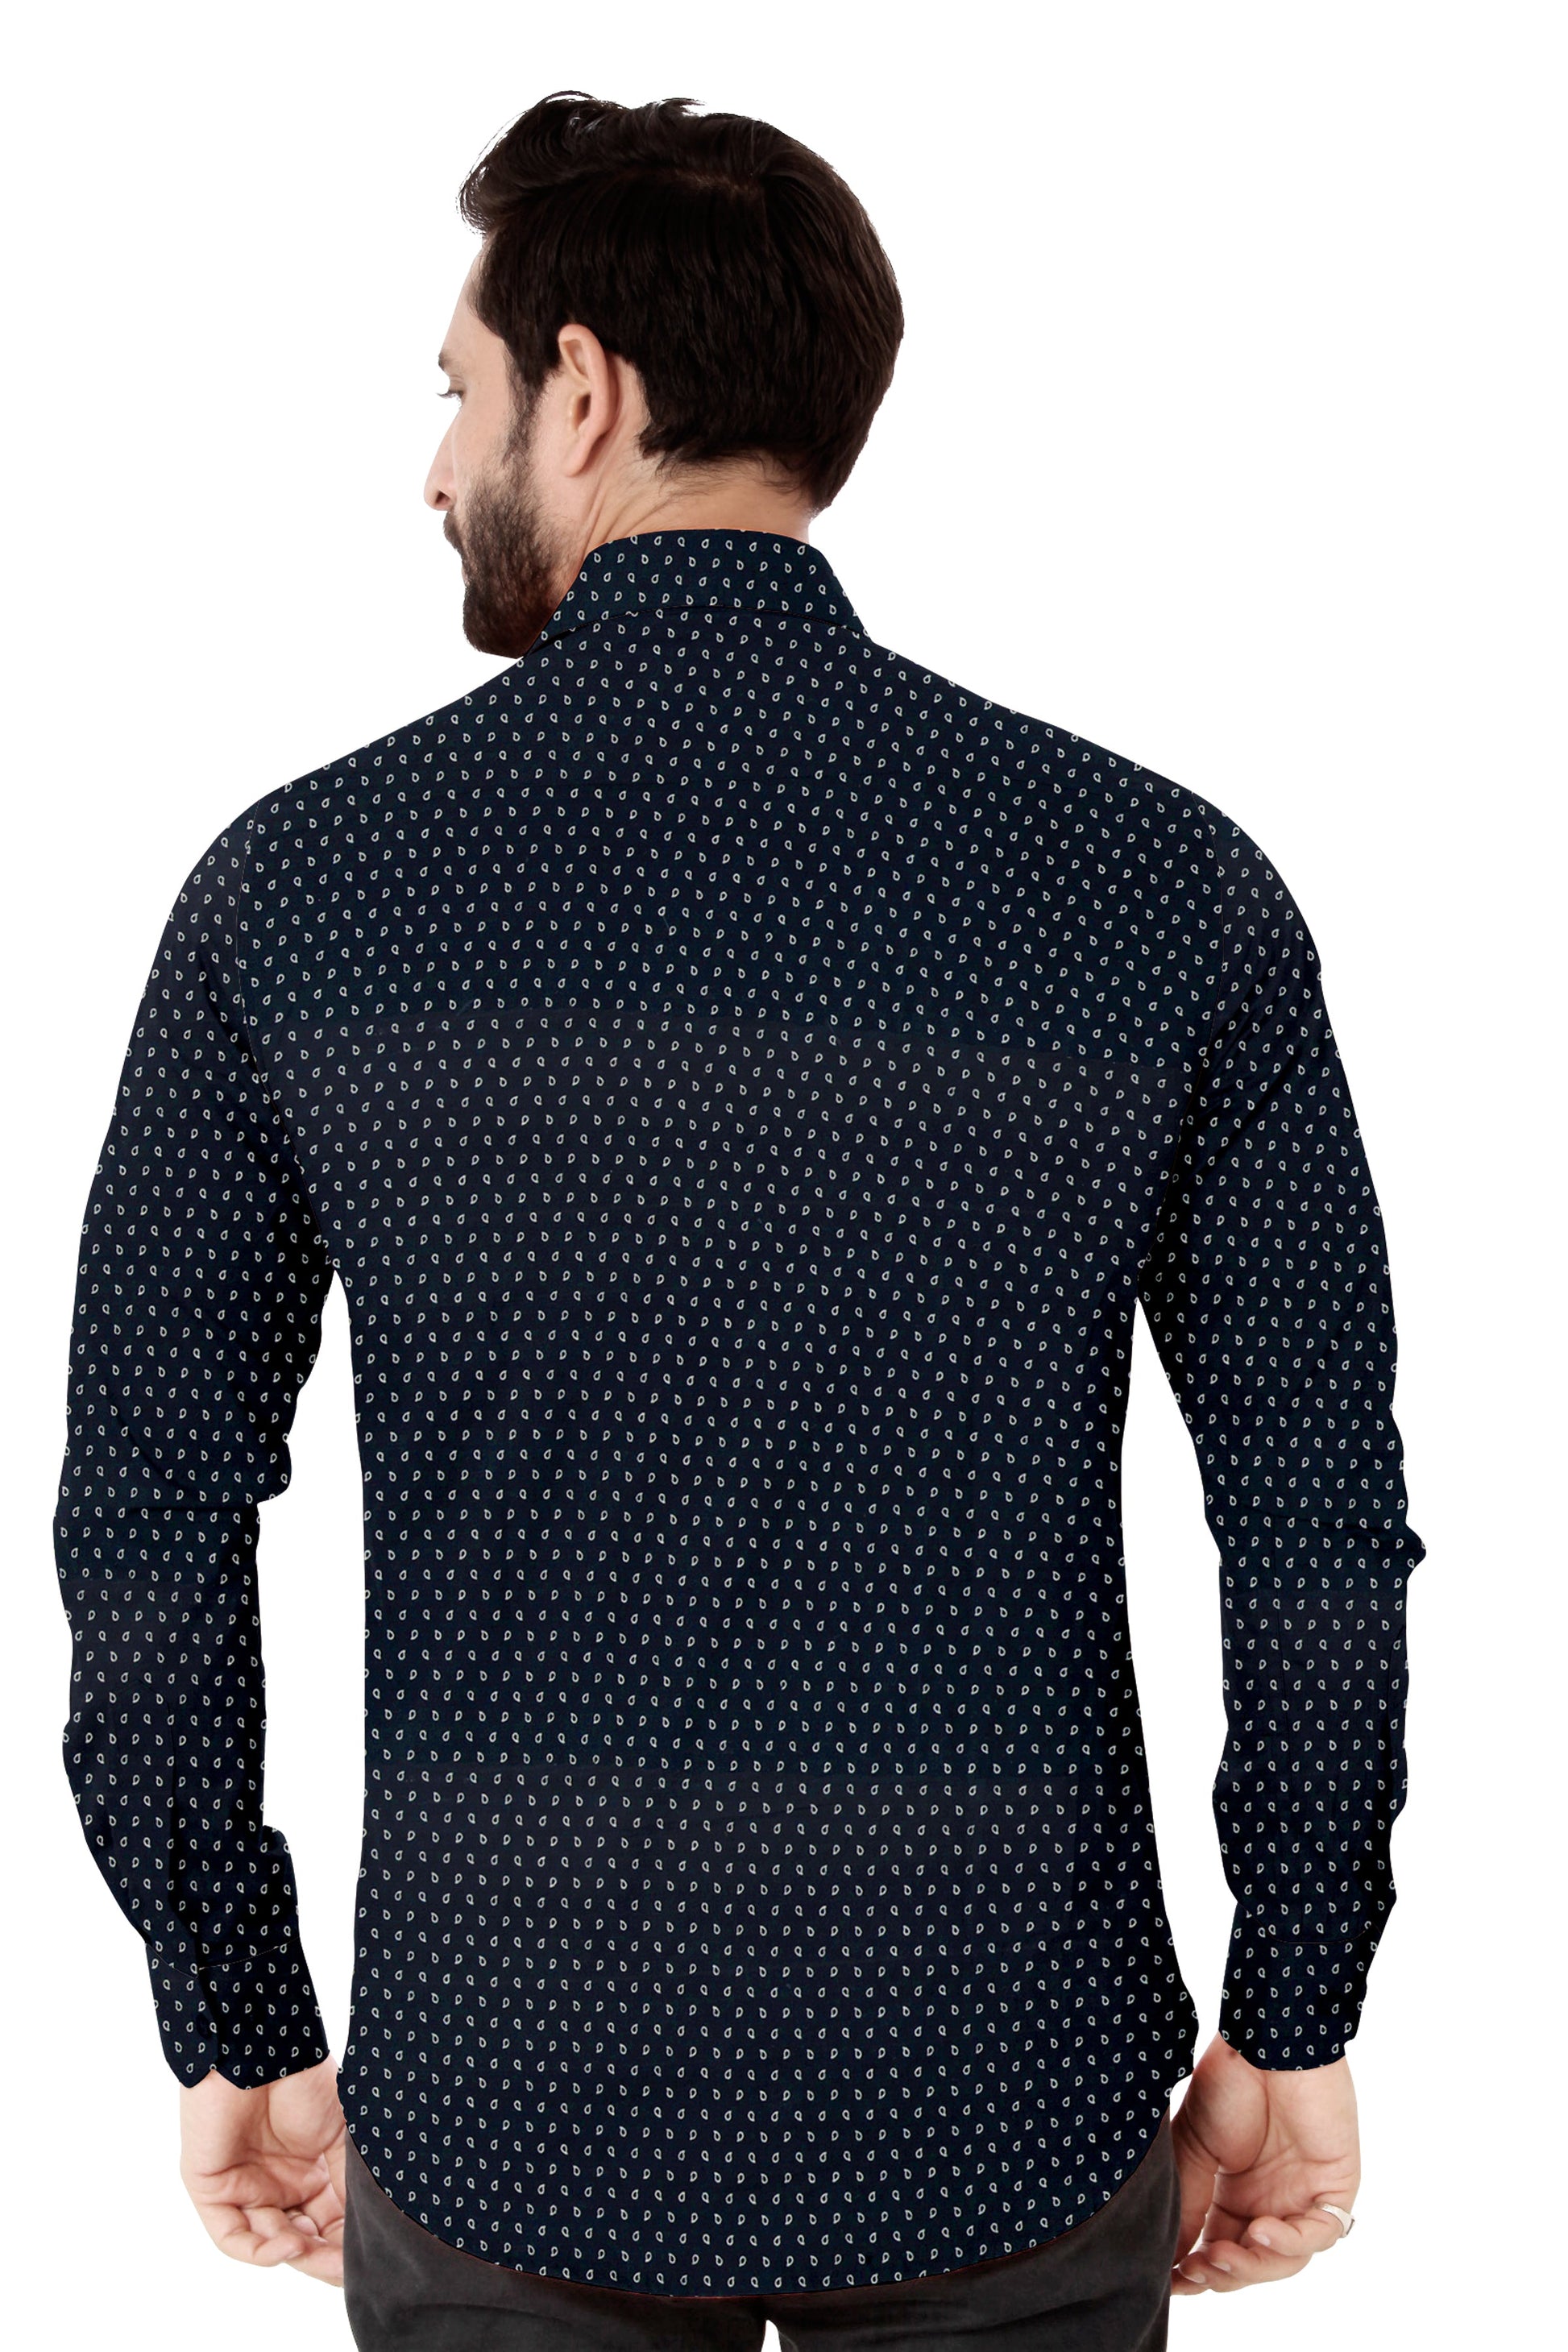 Men's Black Casual Shirt Full Sleeves 100% Cotton - Styleflea